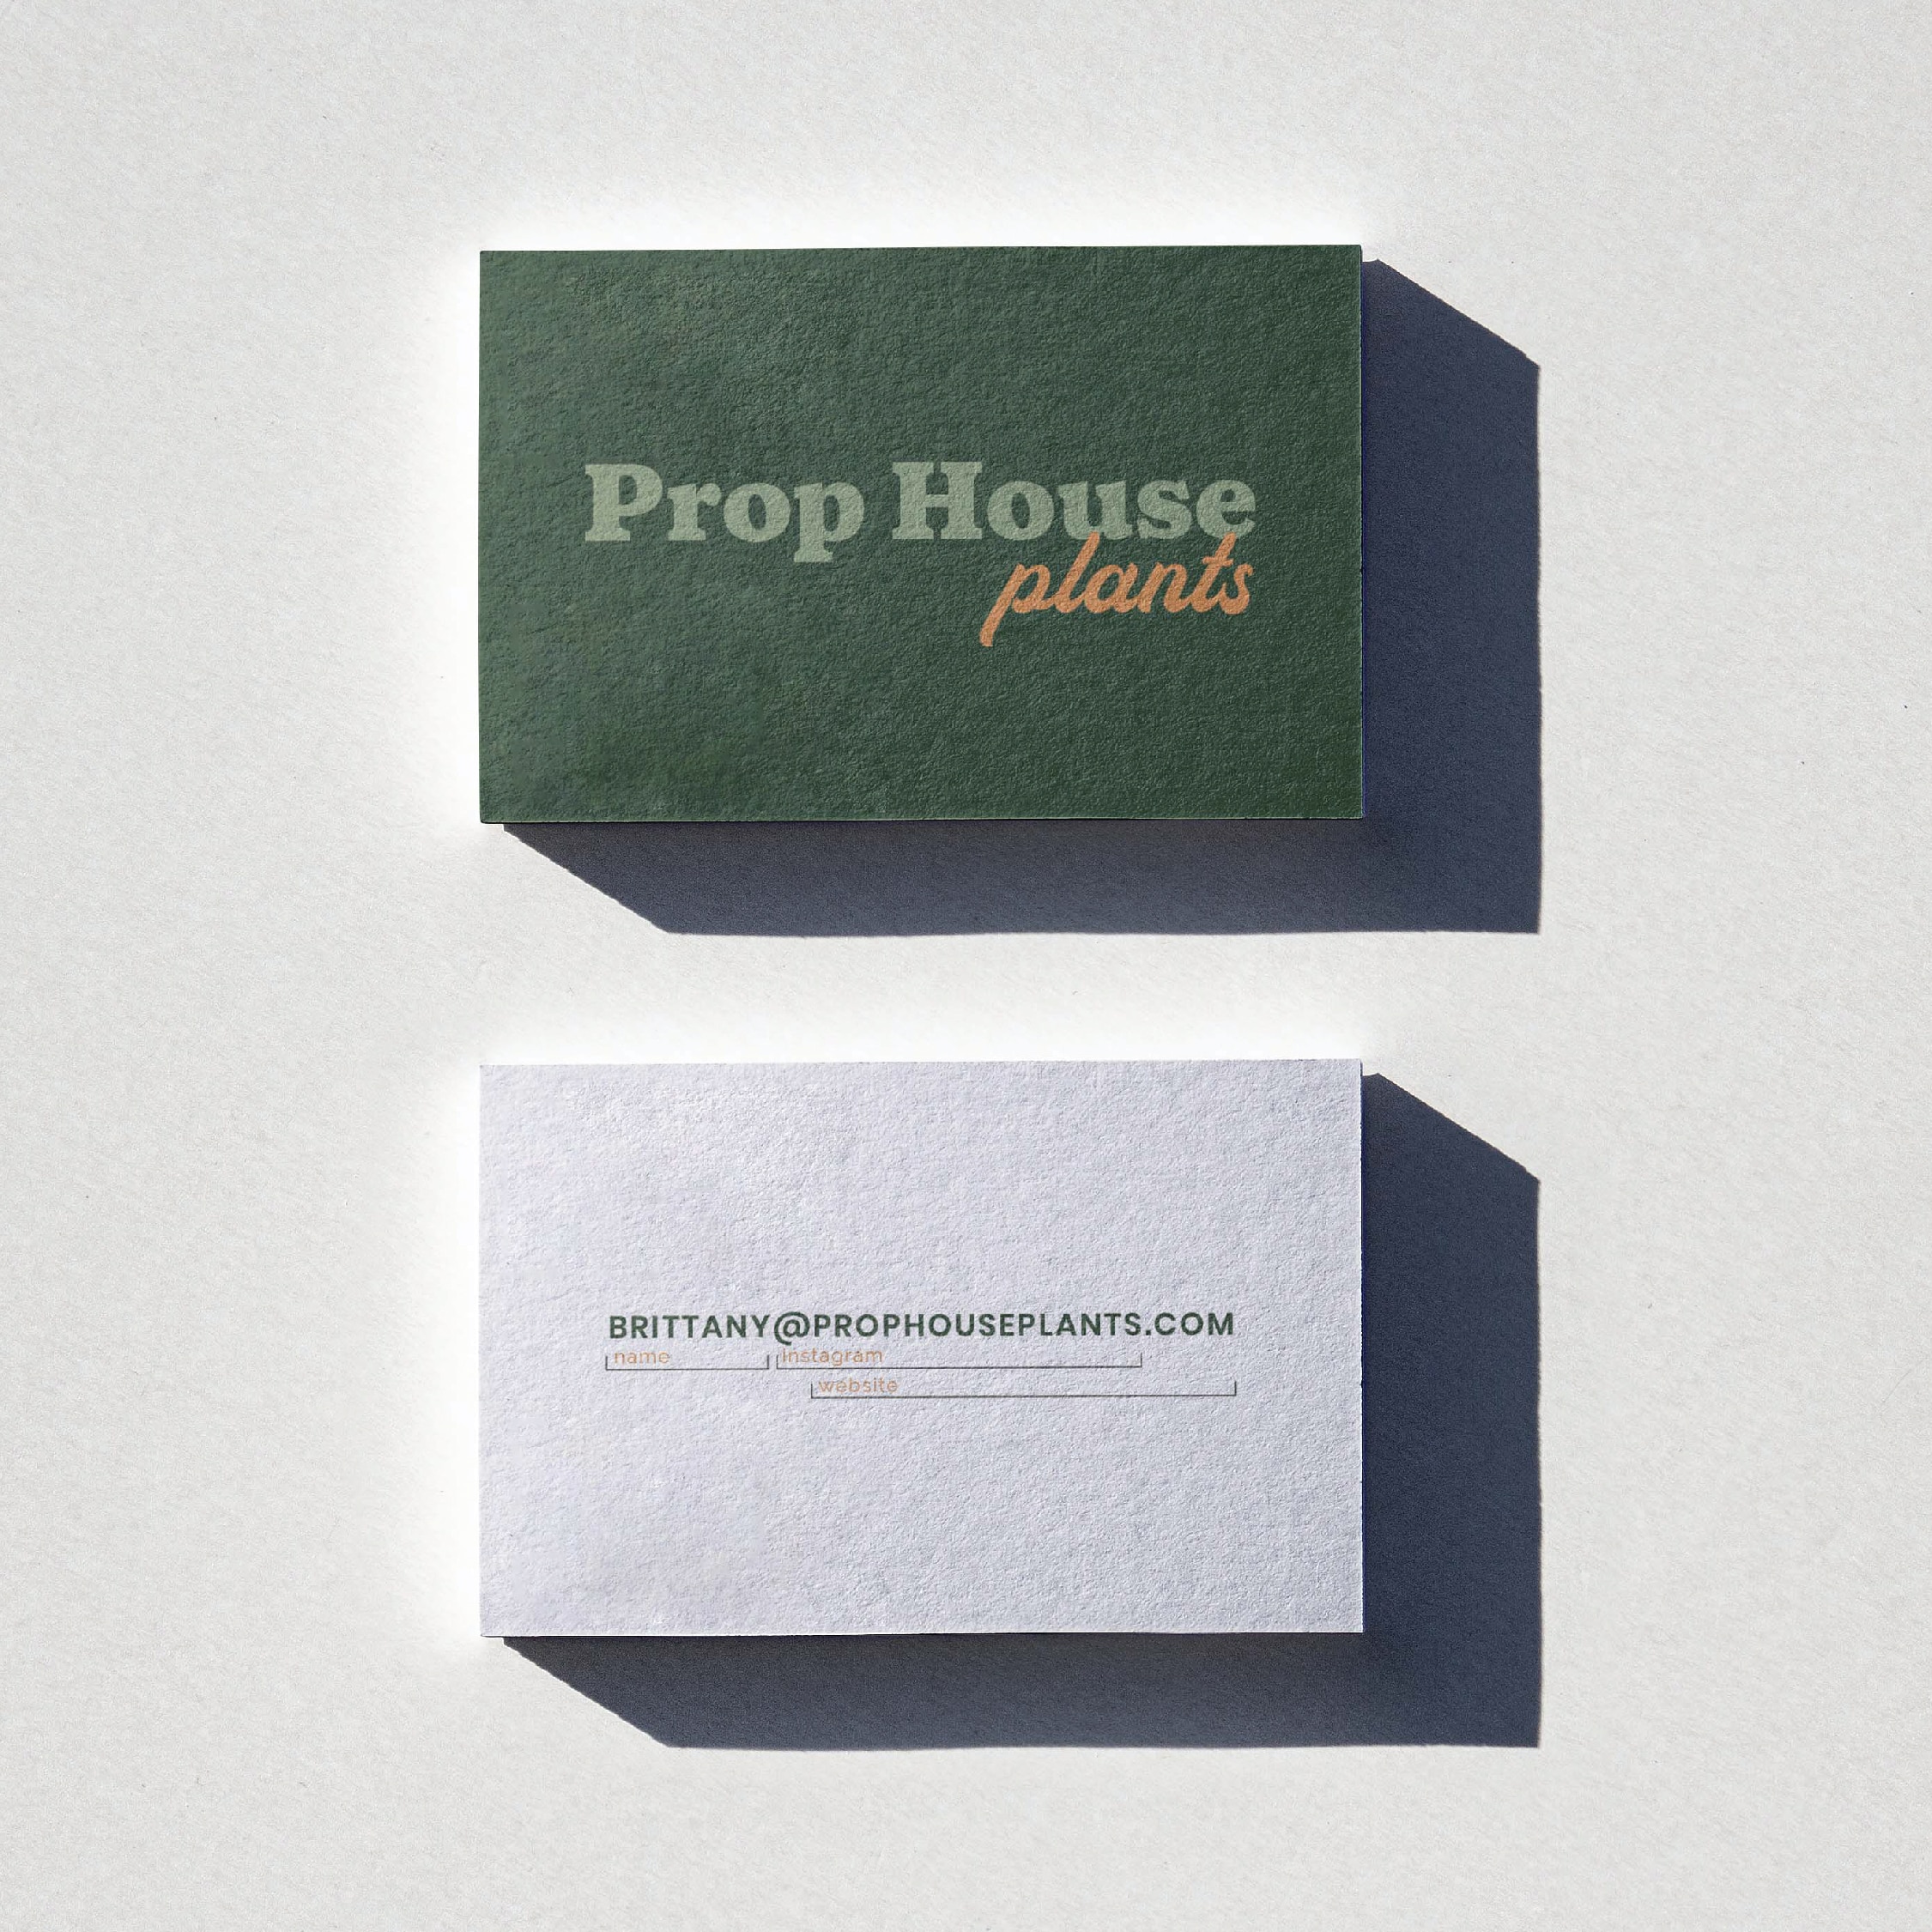 Prop_House_Branding_By_Stellen_Design_Business Cards